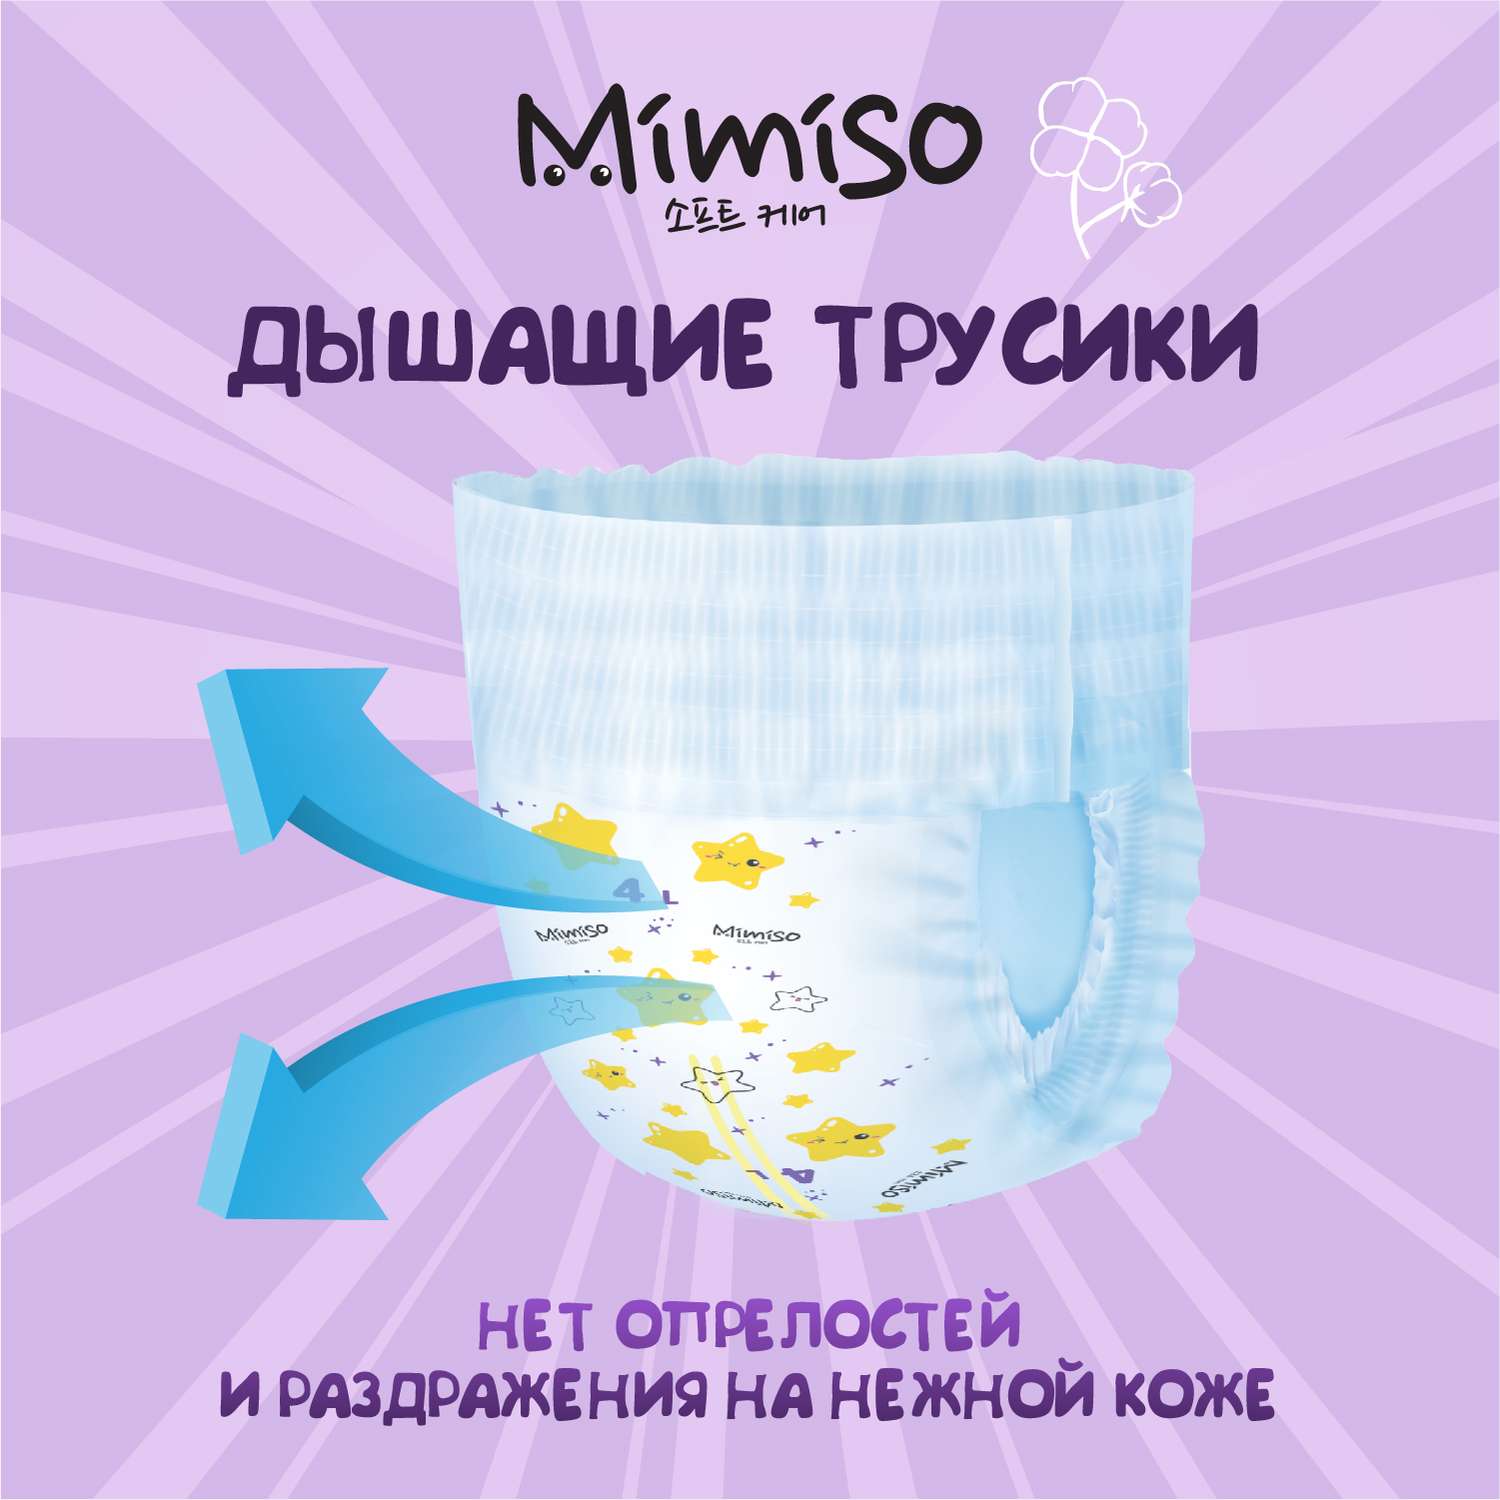 Трусики Mimiso одноразовые для детей 4/L 9-14 кг 42шт - фото 5